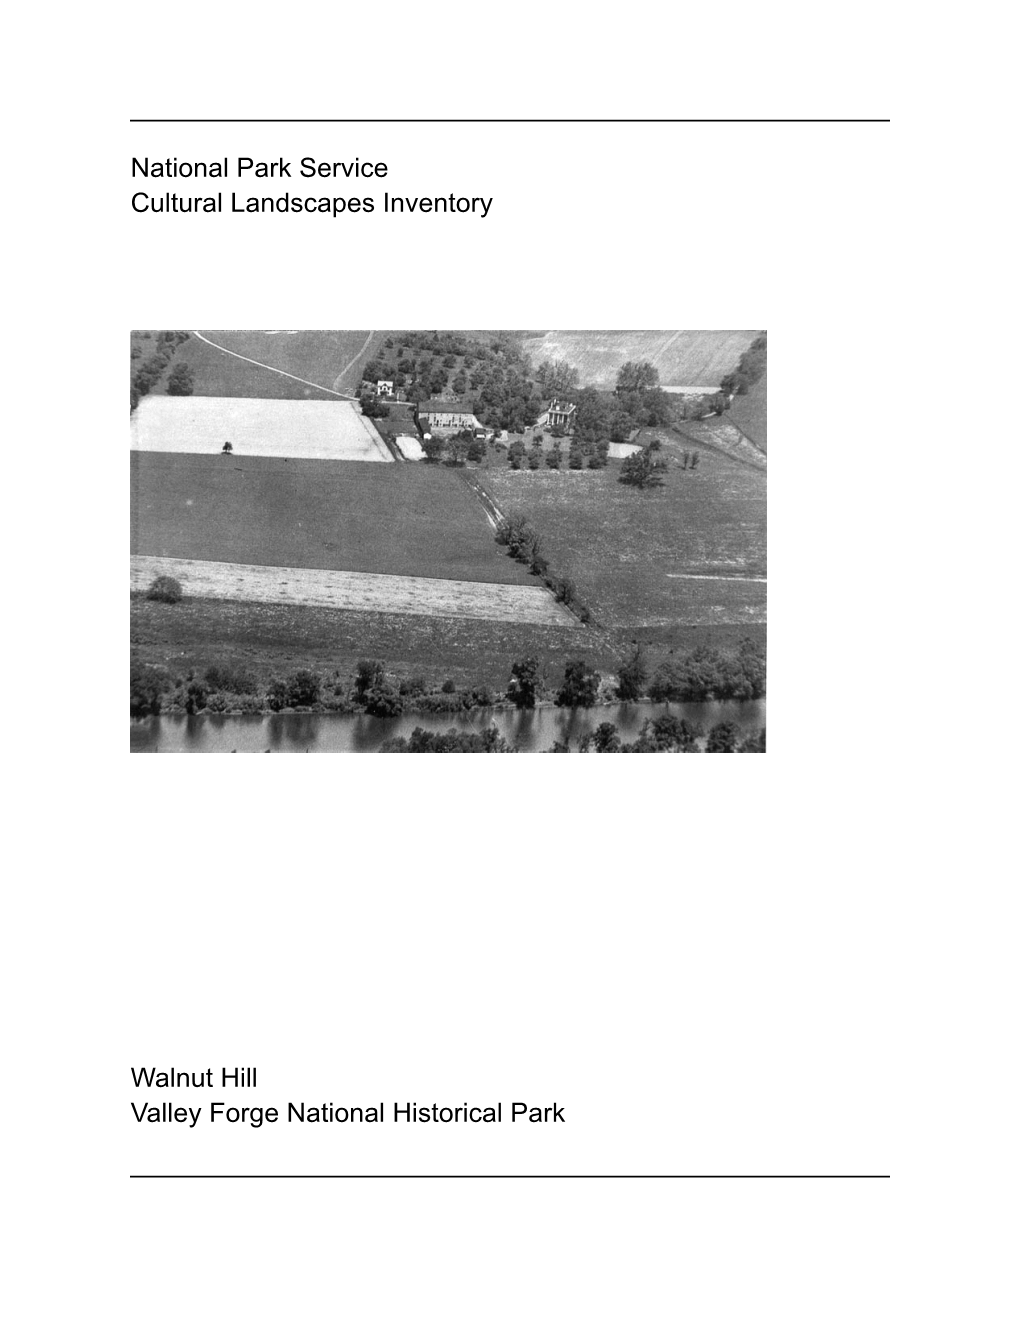 National Park Service Cultural Landscapes Inventory Walnut Hill